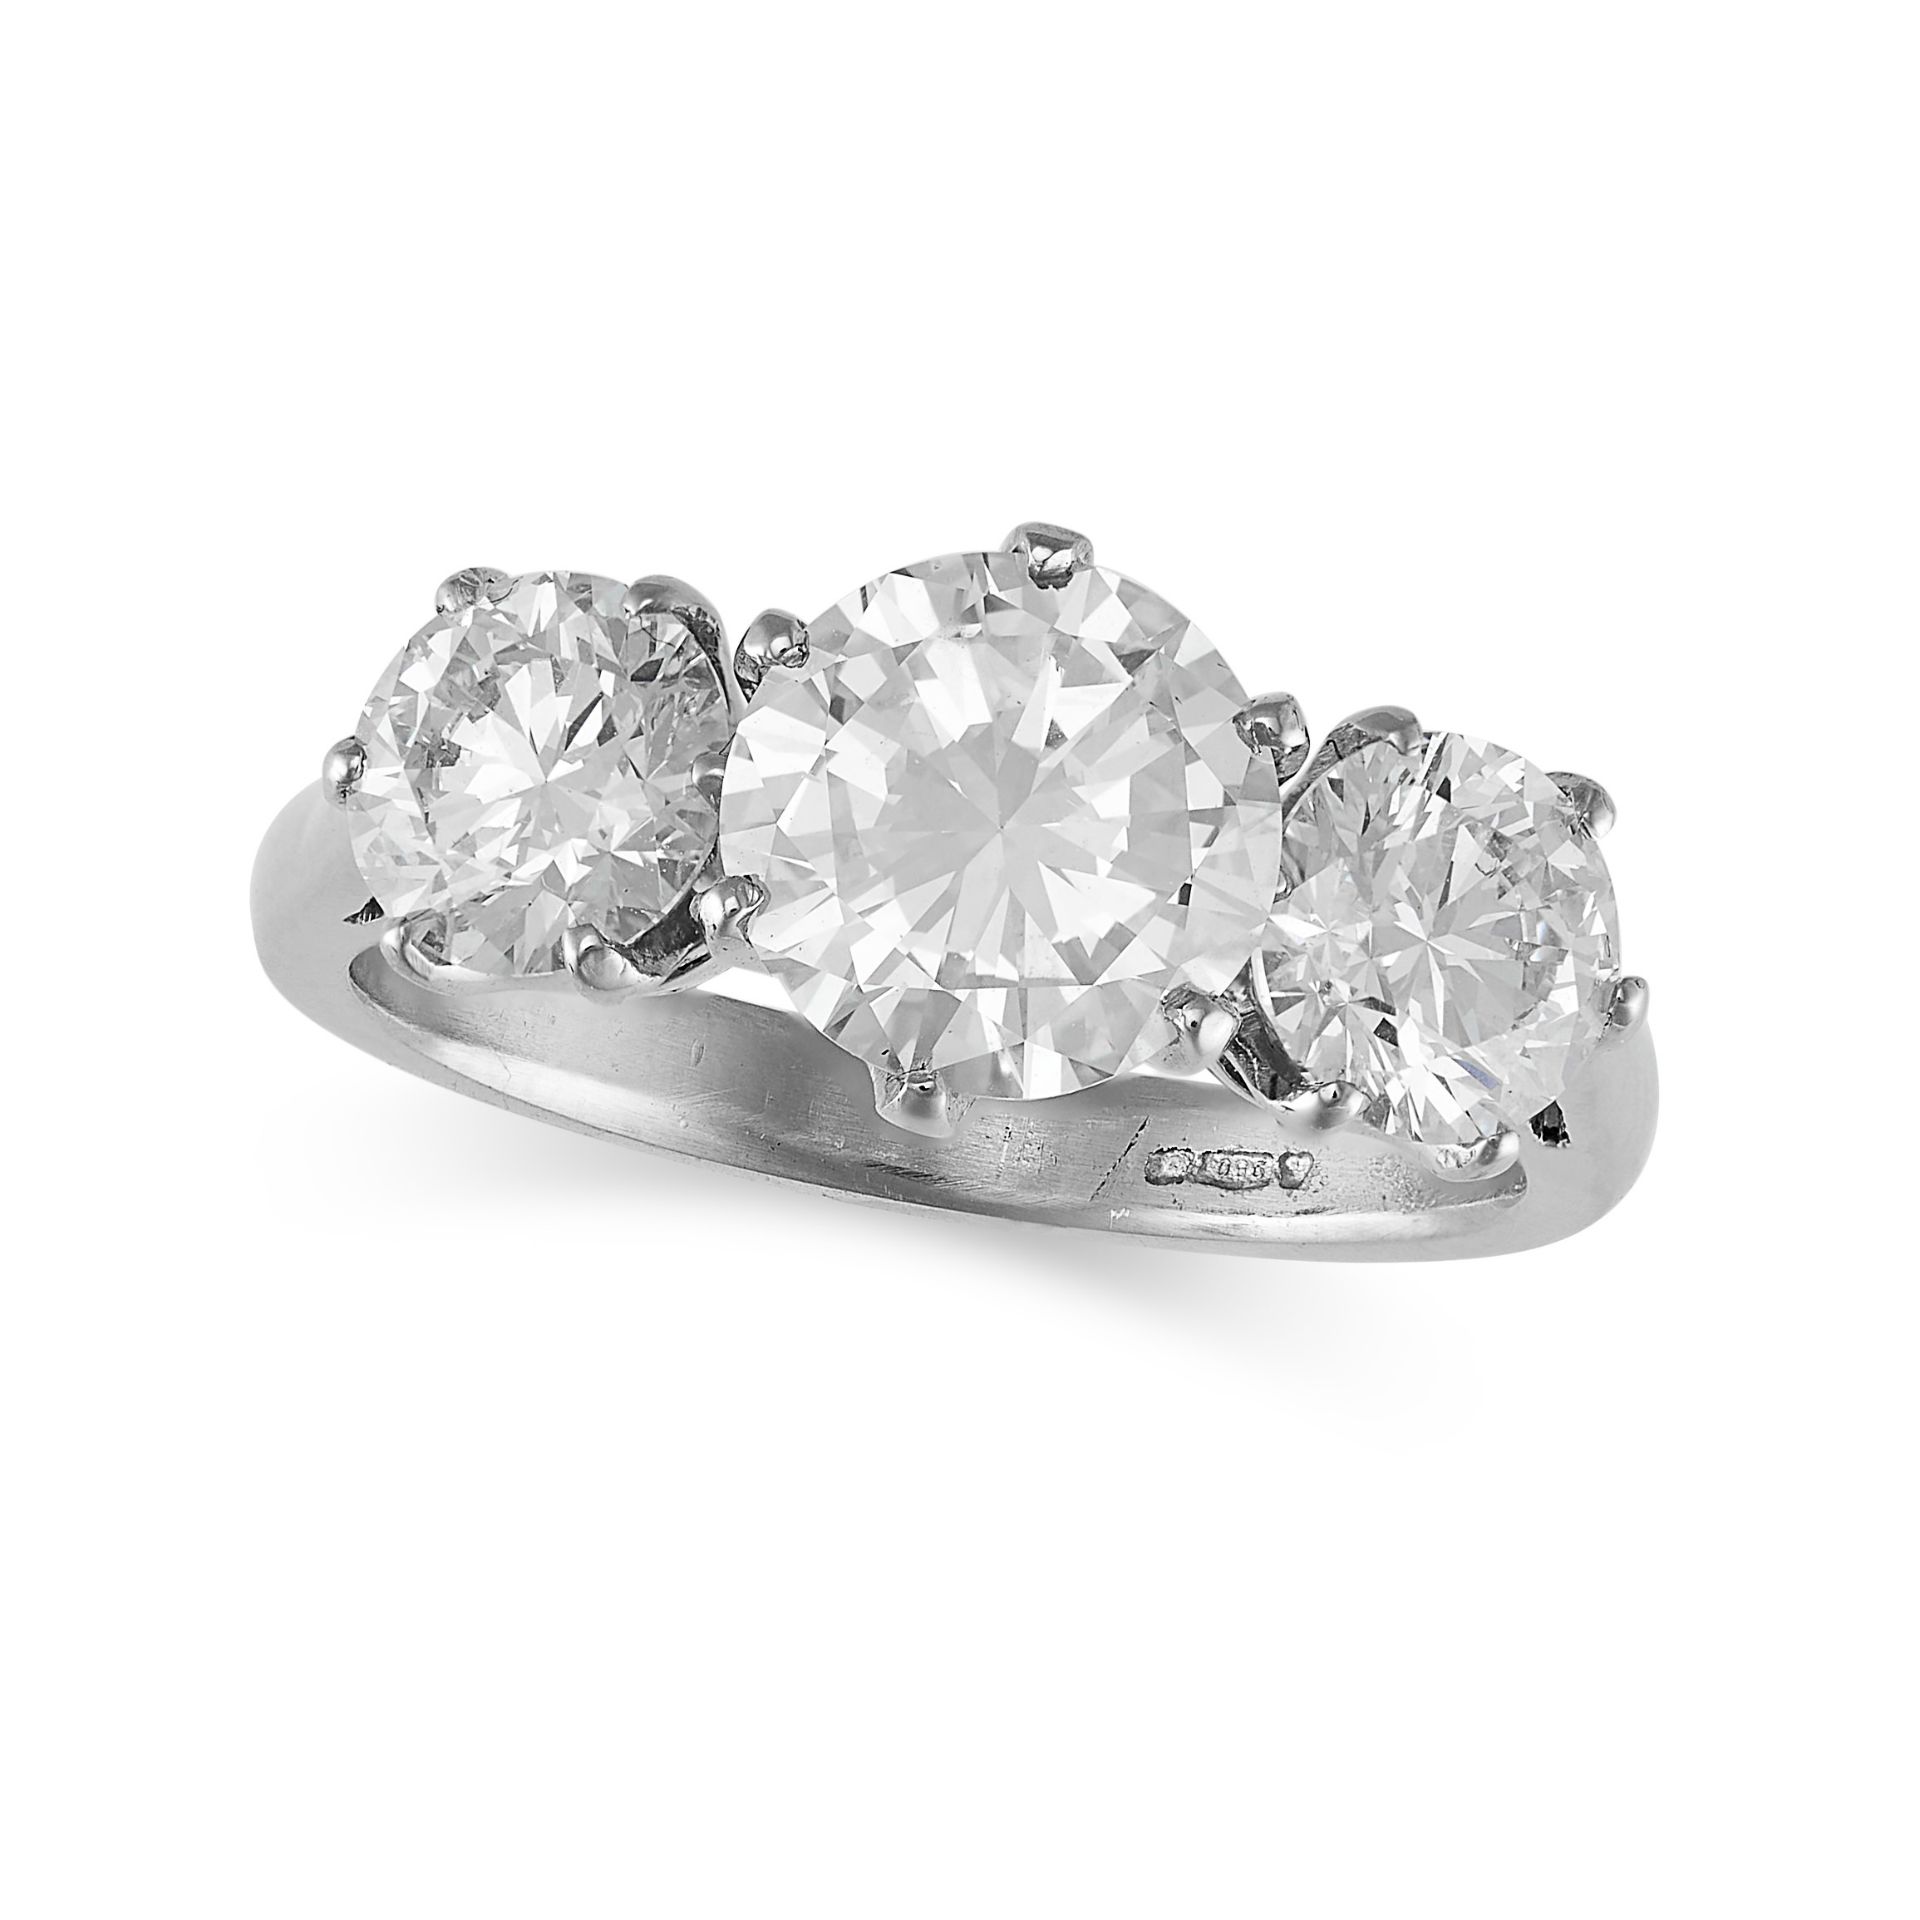 A DIAMOND THREE STONE RING in white gold, set with three round brilliant cut diamonds of 0.83, 1....